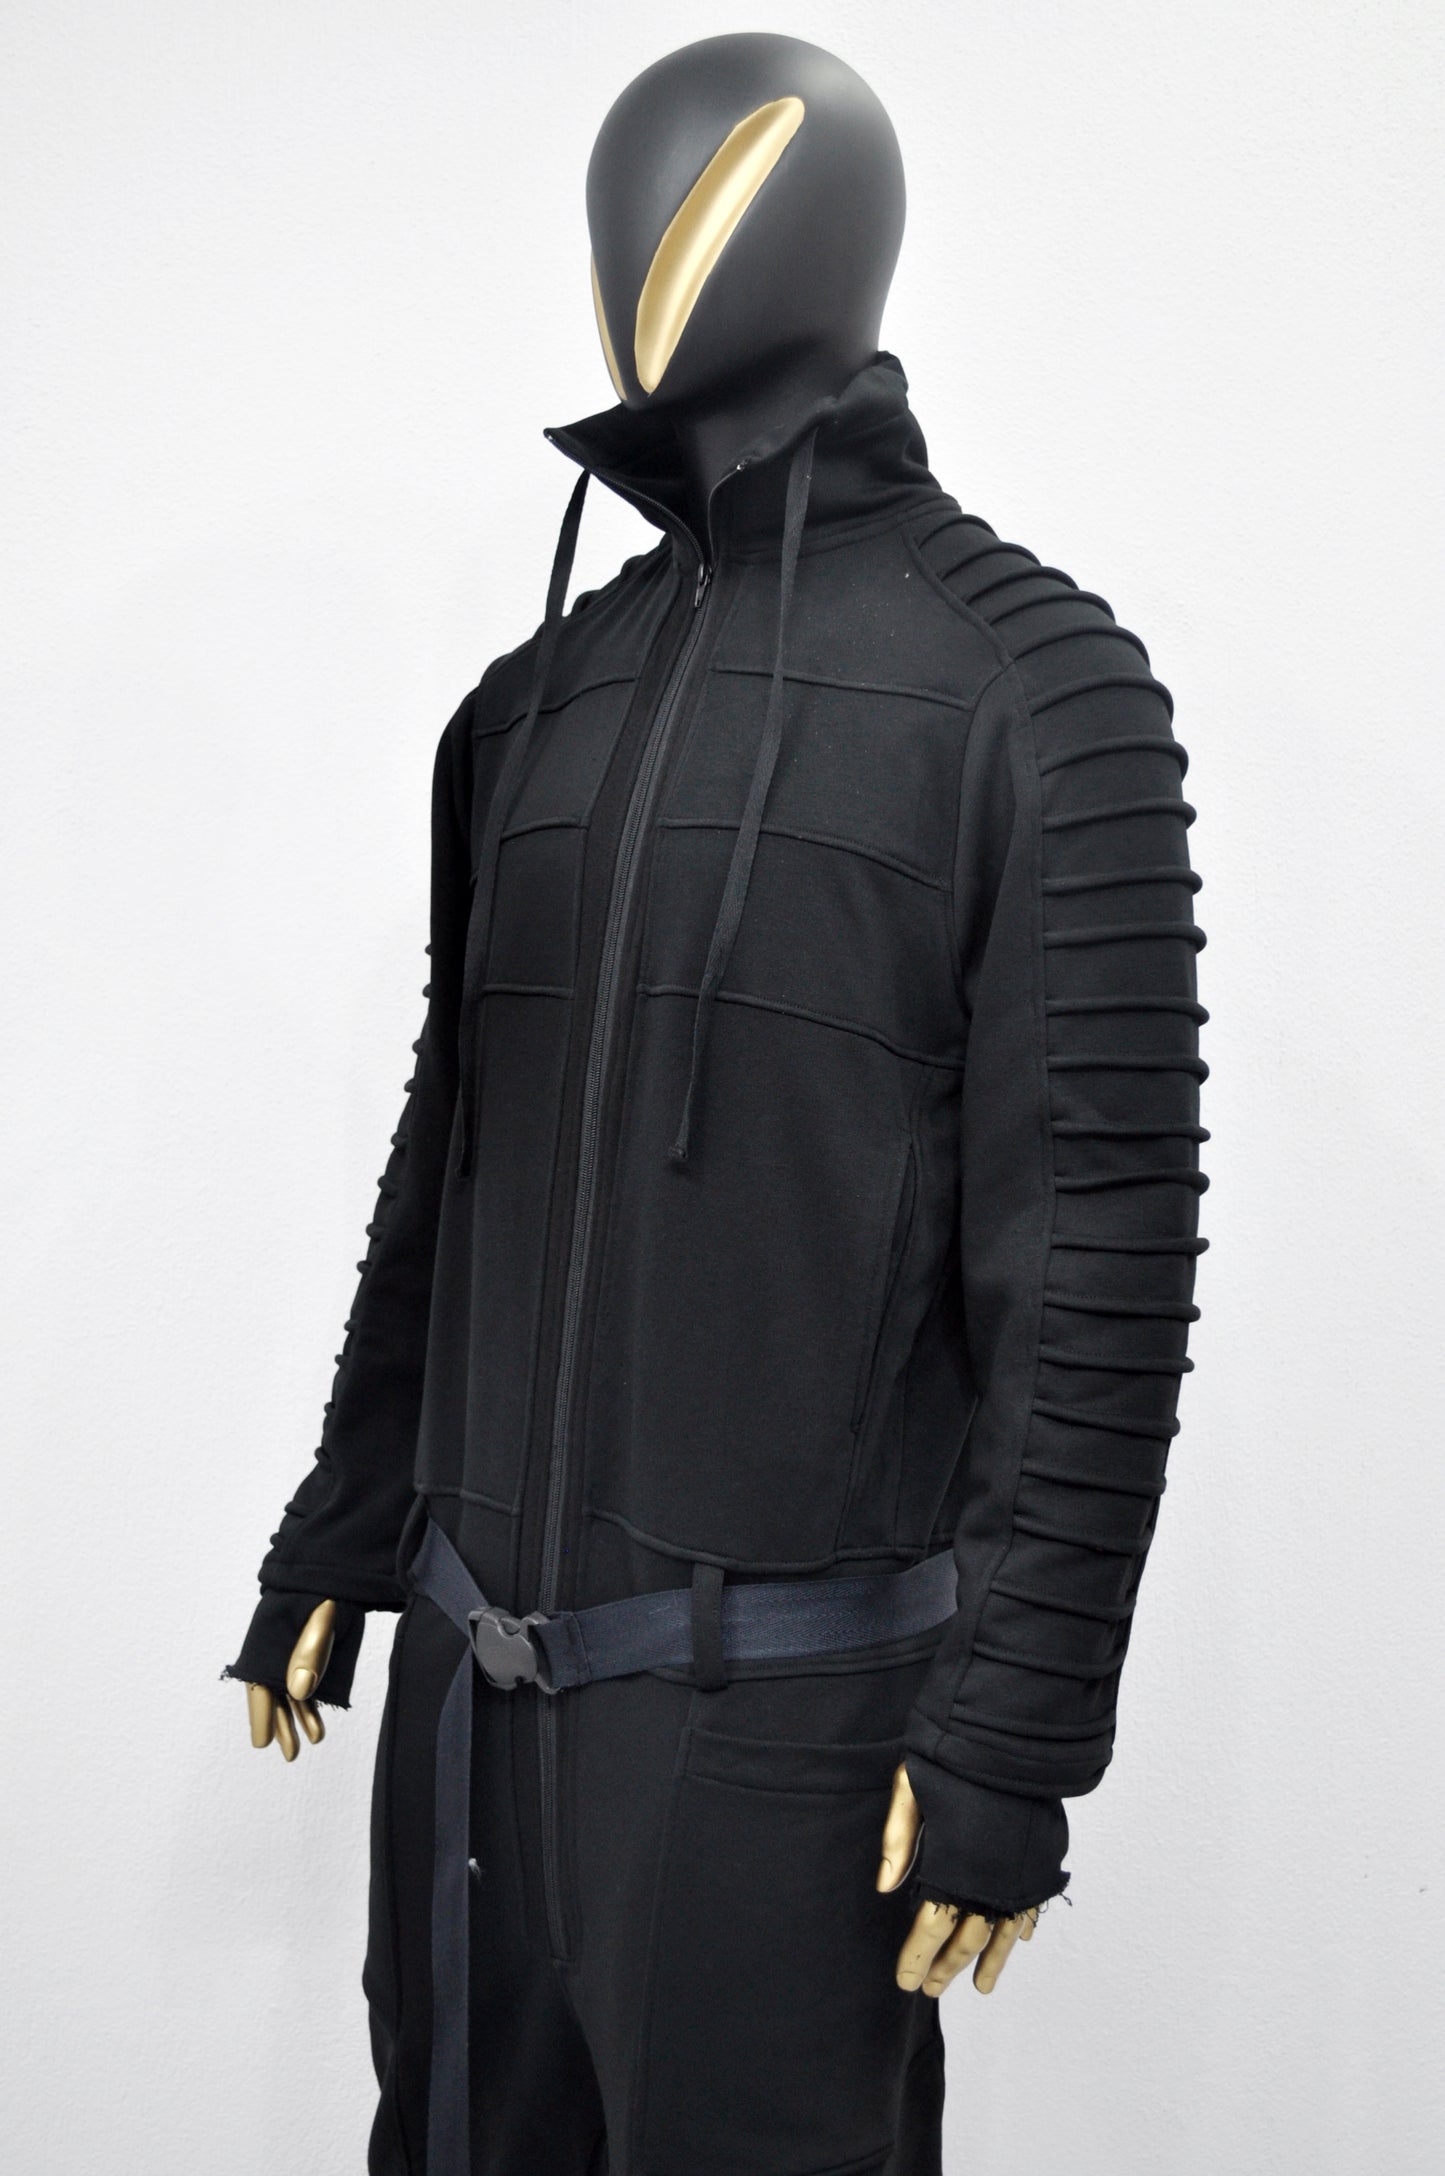 XS - 8XL Men's Black Overall Jumpsuit,Sci-fi Cosplay Flight Suit,Rave Regalo Moch,Cyberpunk/Futuristic Jacket,Gothic Hoodie/PLUS SIZE-BB0155